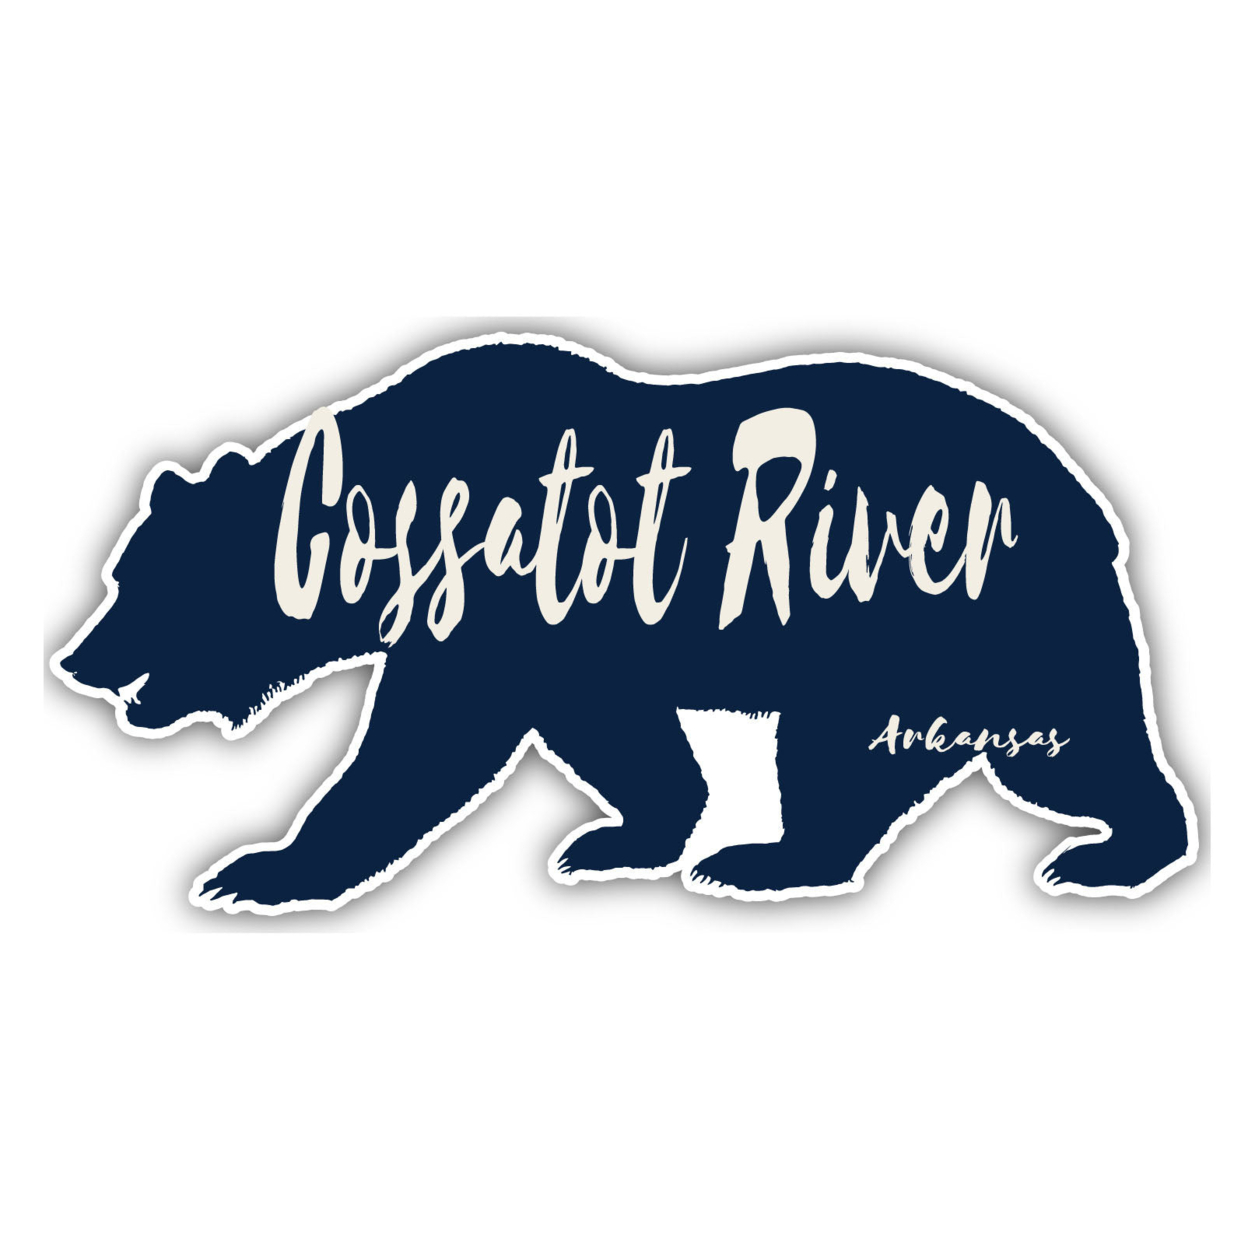 Cossatot River Arkansas Souvenir Decorative Stickers (Choose Theme And Size) - Single Unit, 2-Inch, Great Outdoors